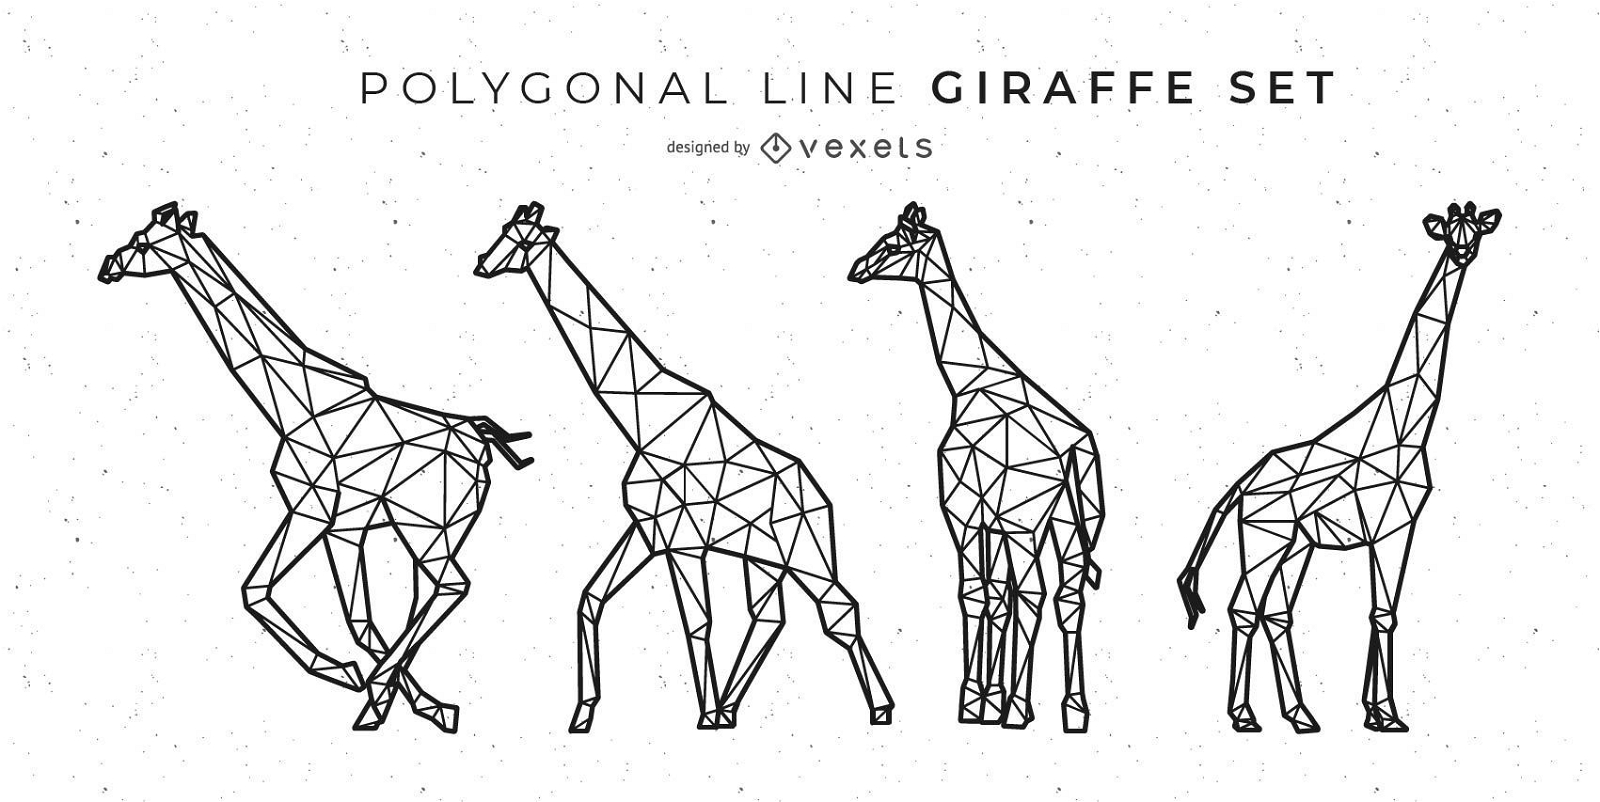 Polygonal Line Giraffe Set